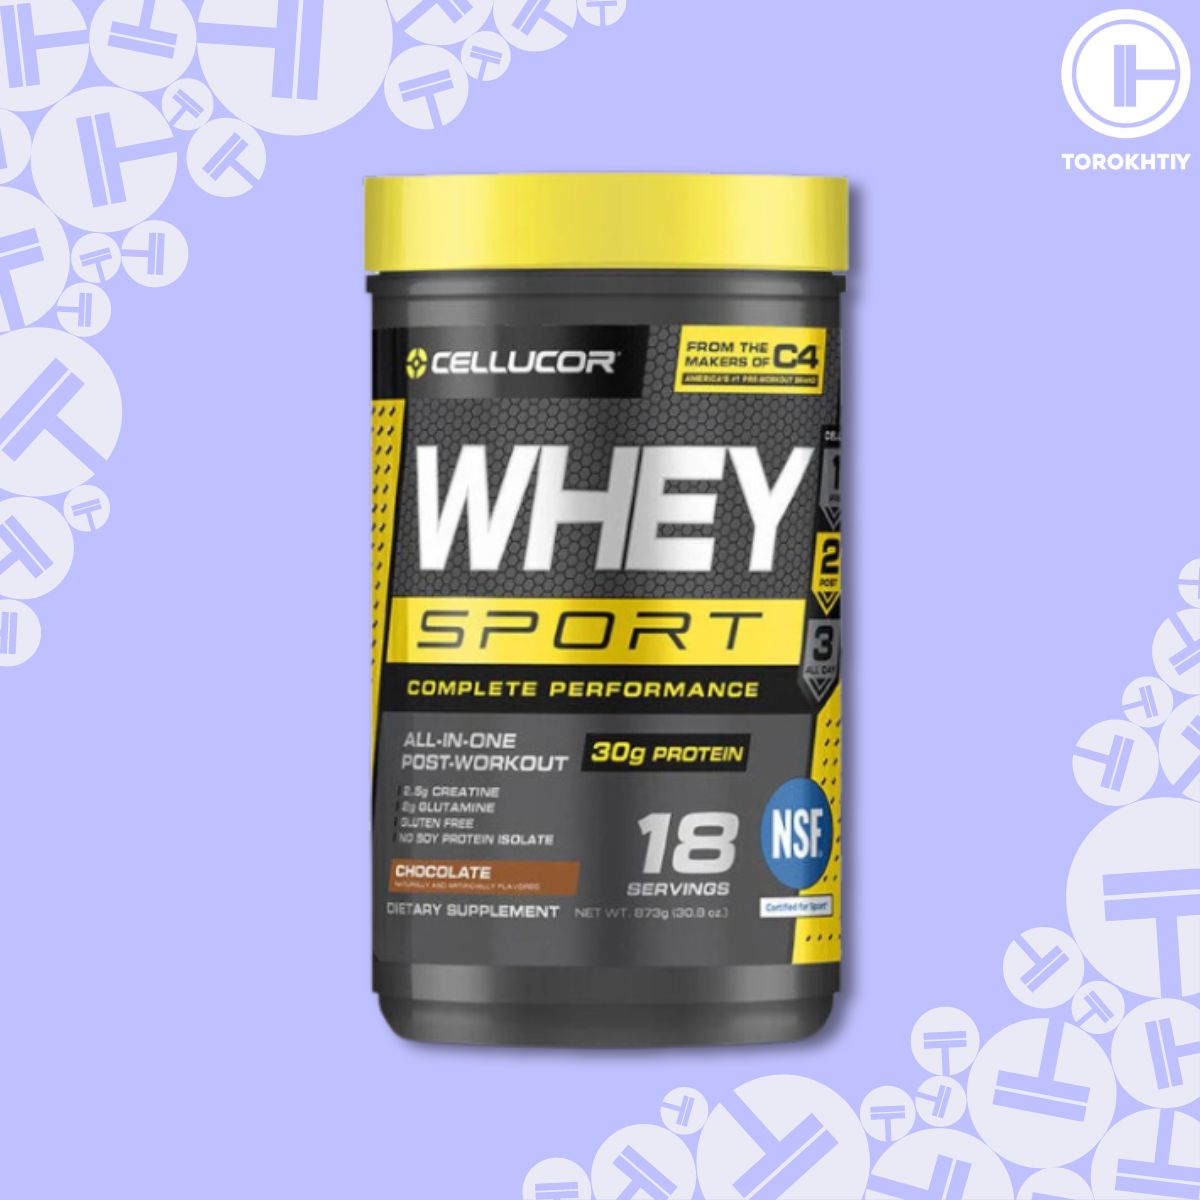 Cellucor Whey Sport Protein Powder